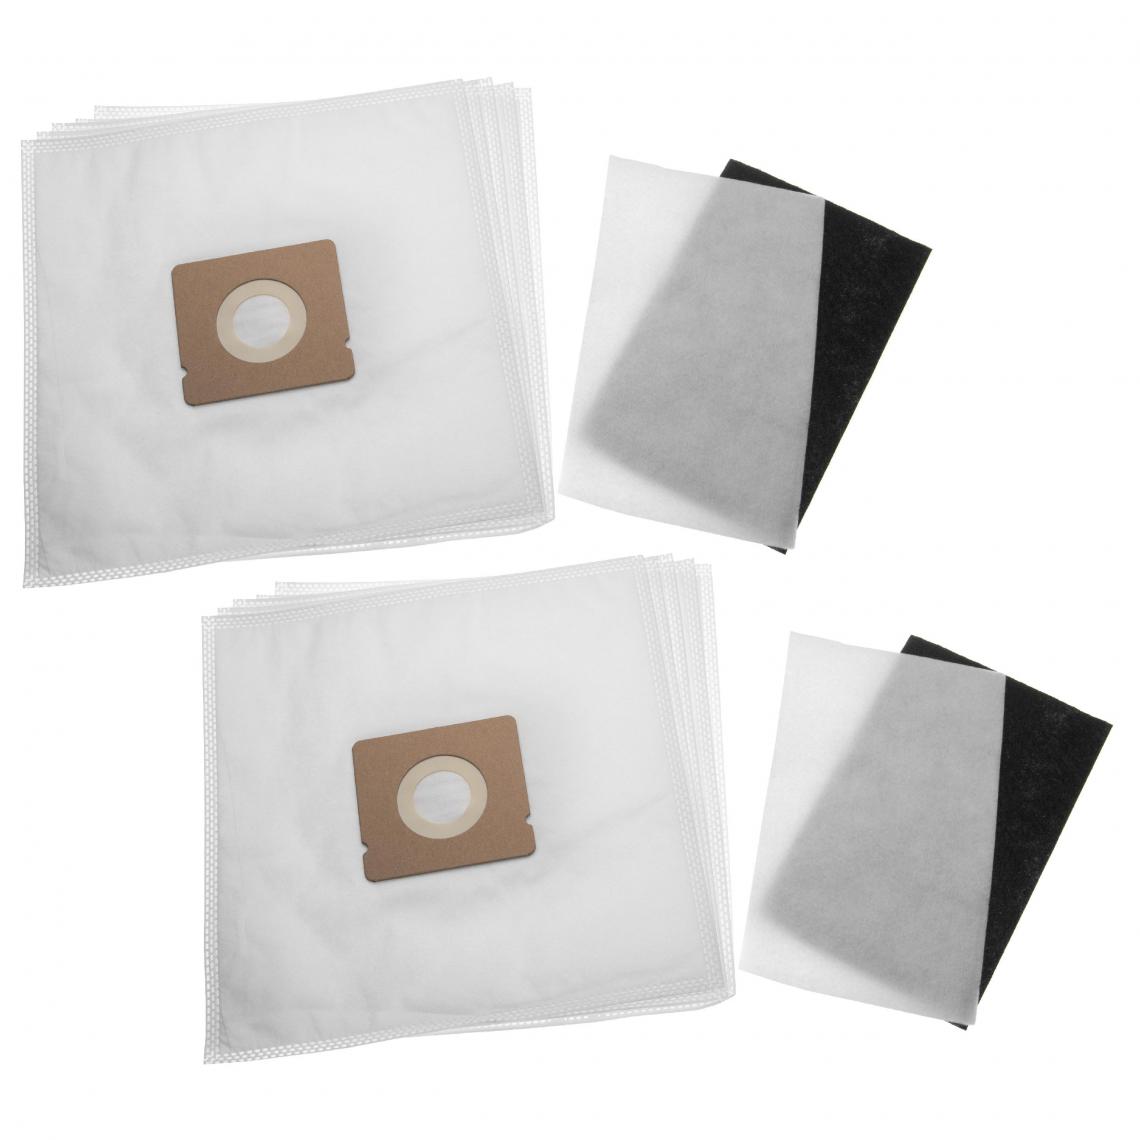 Vhbw - vhbw Lot de sacs (microfibres non tissées) + filtre avec 12 pièces compatible avec Rowenta RO2455, RO2455WA, RO2465, RO2465WA, RO2611 aspirateur - Accessoire entretien des sols